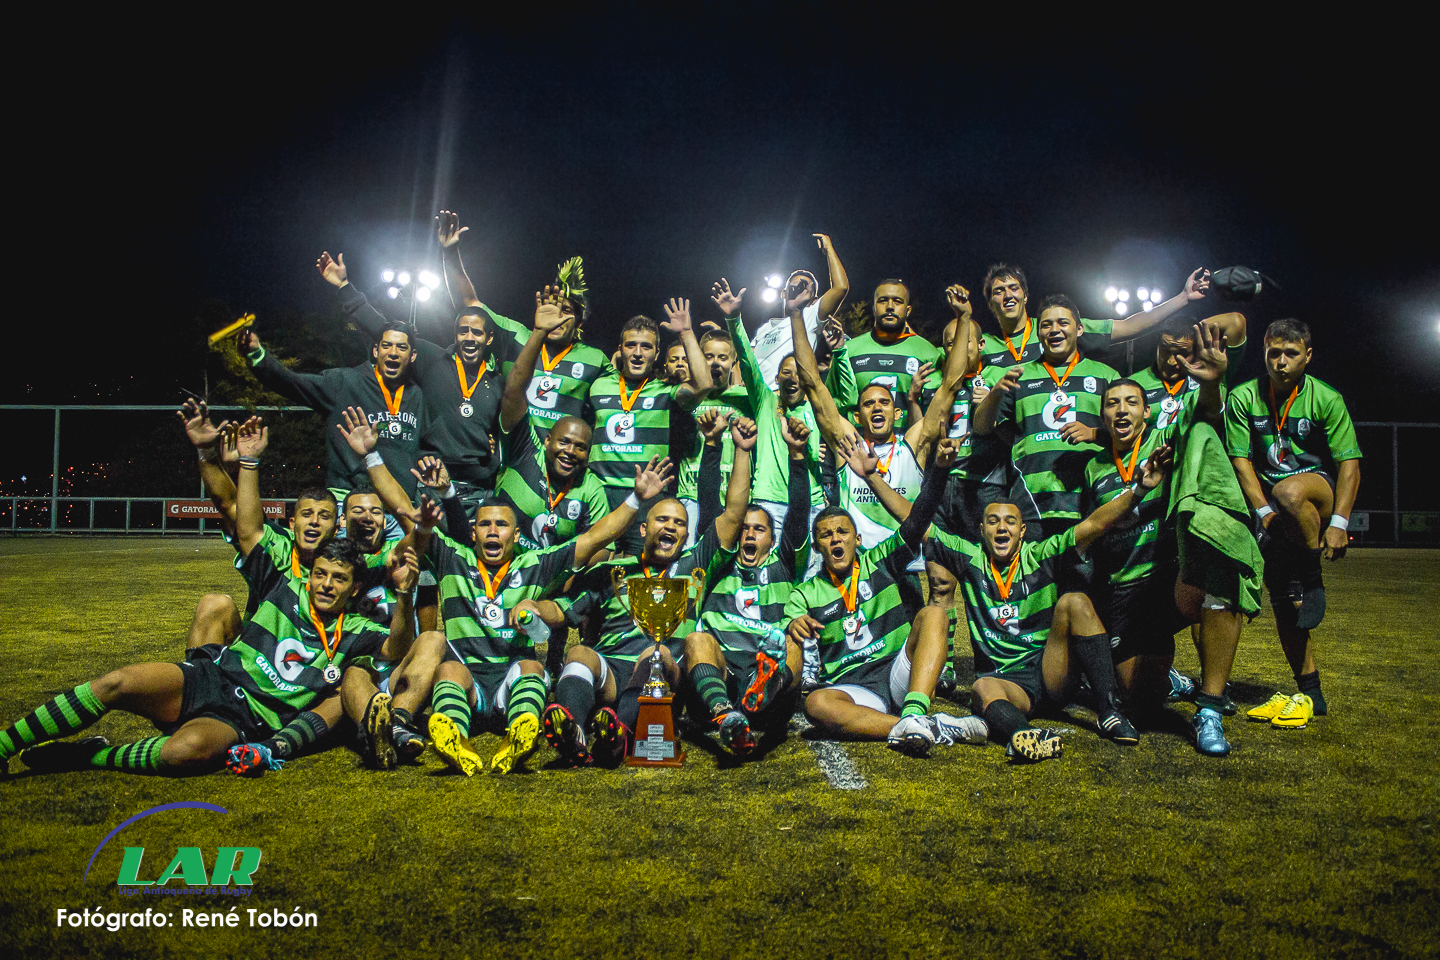 Histórico triunfo de Fénix R.C contra Duendes R.C - Cuarta Fecha de la Copa Telemedellín